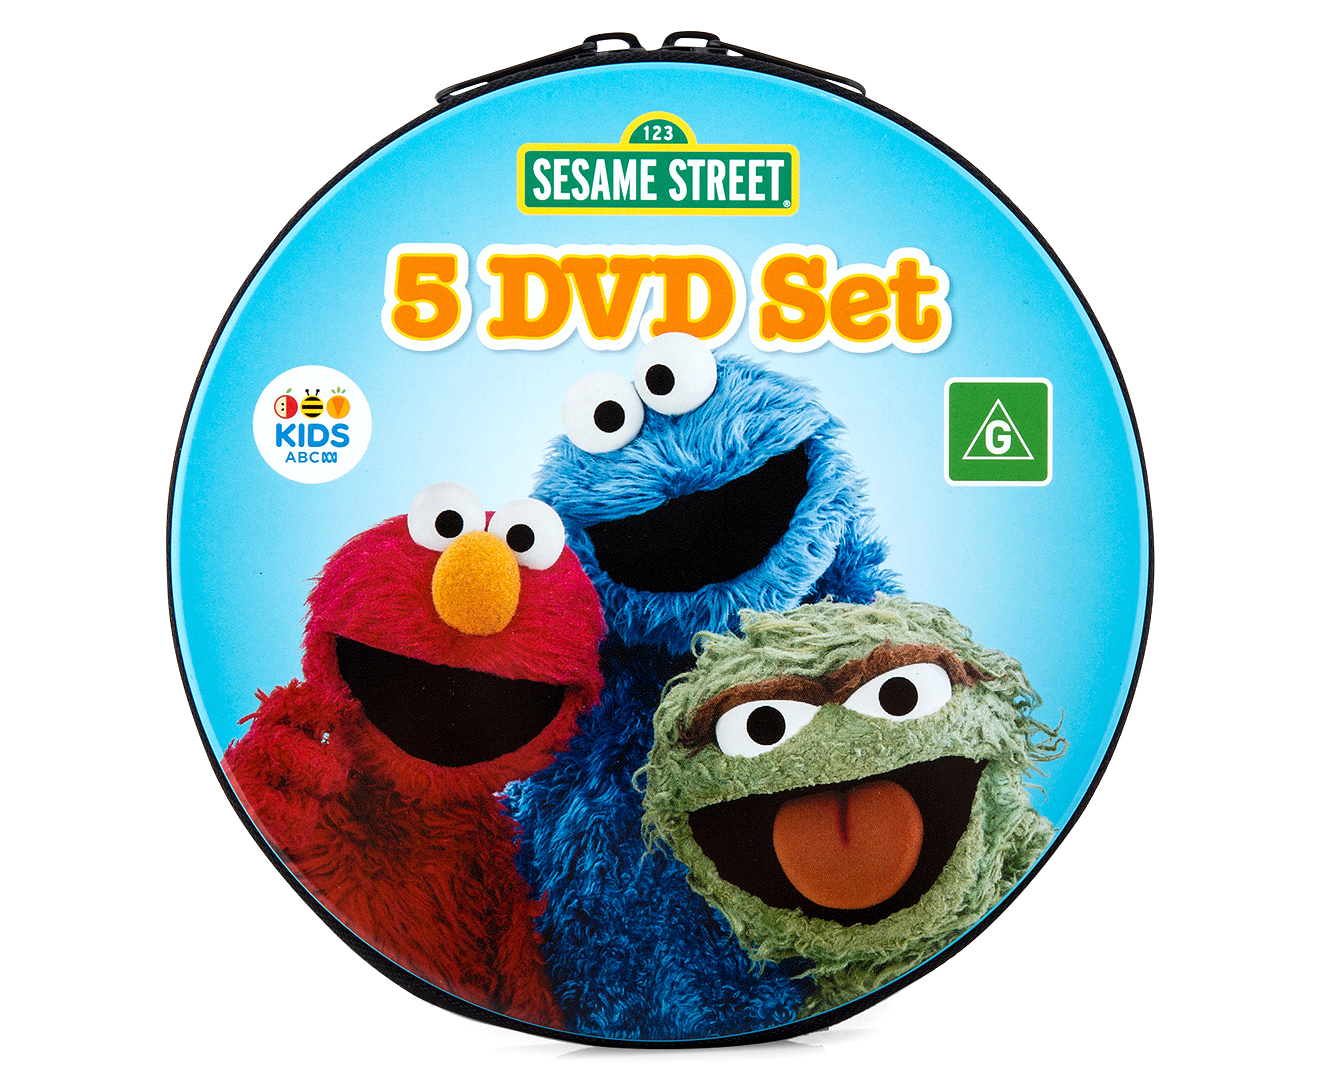 Sesame Street 5-DVD Collection.